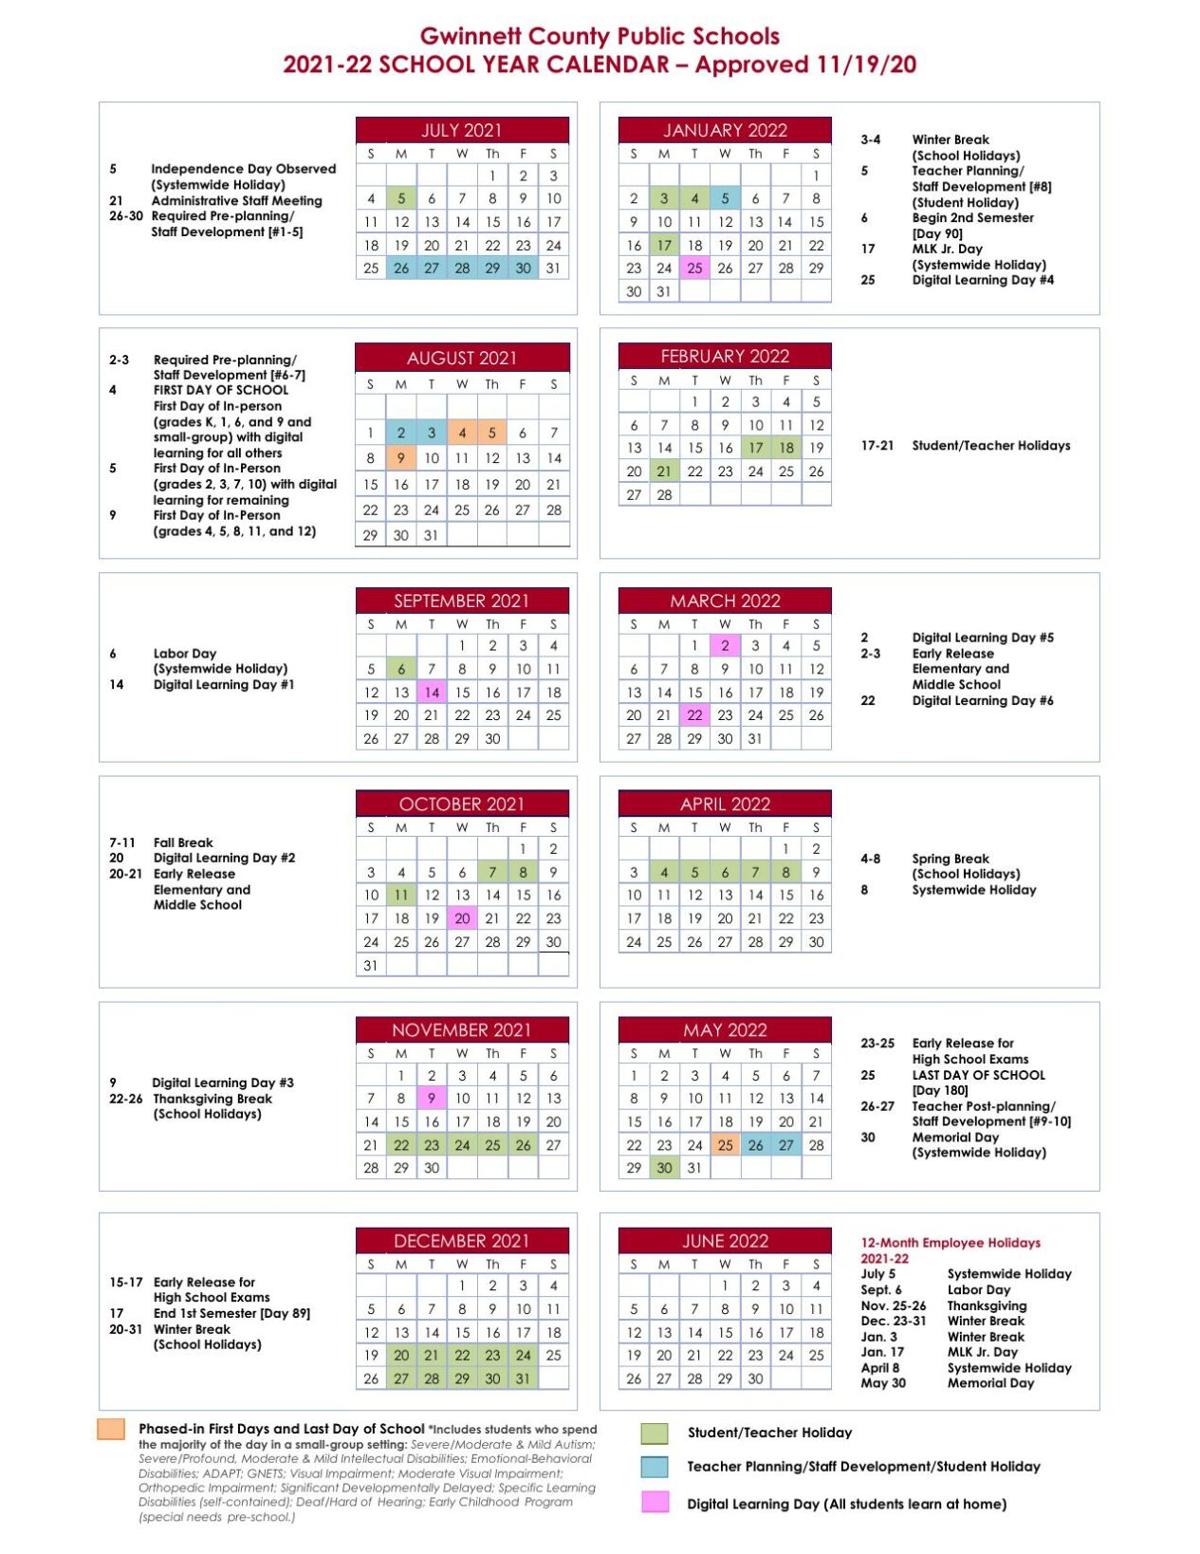 Georgia Southern Academic Calendar 2022 2023 Gwinnett County Public Schools' 2021-2022 School Year Calendar | |  Gwinnettdailypost.com